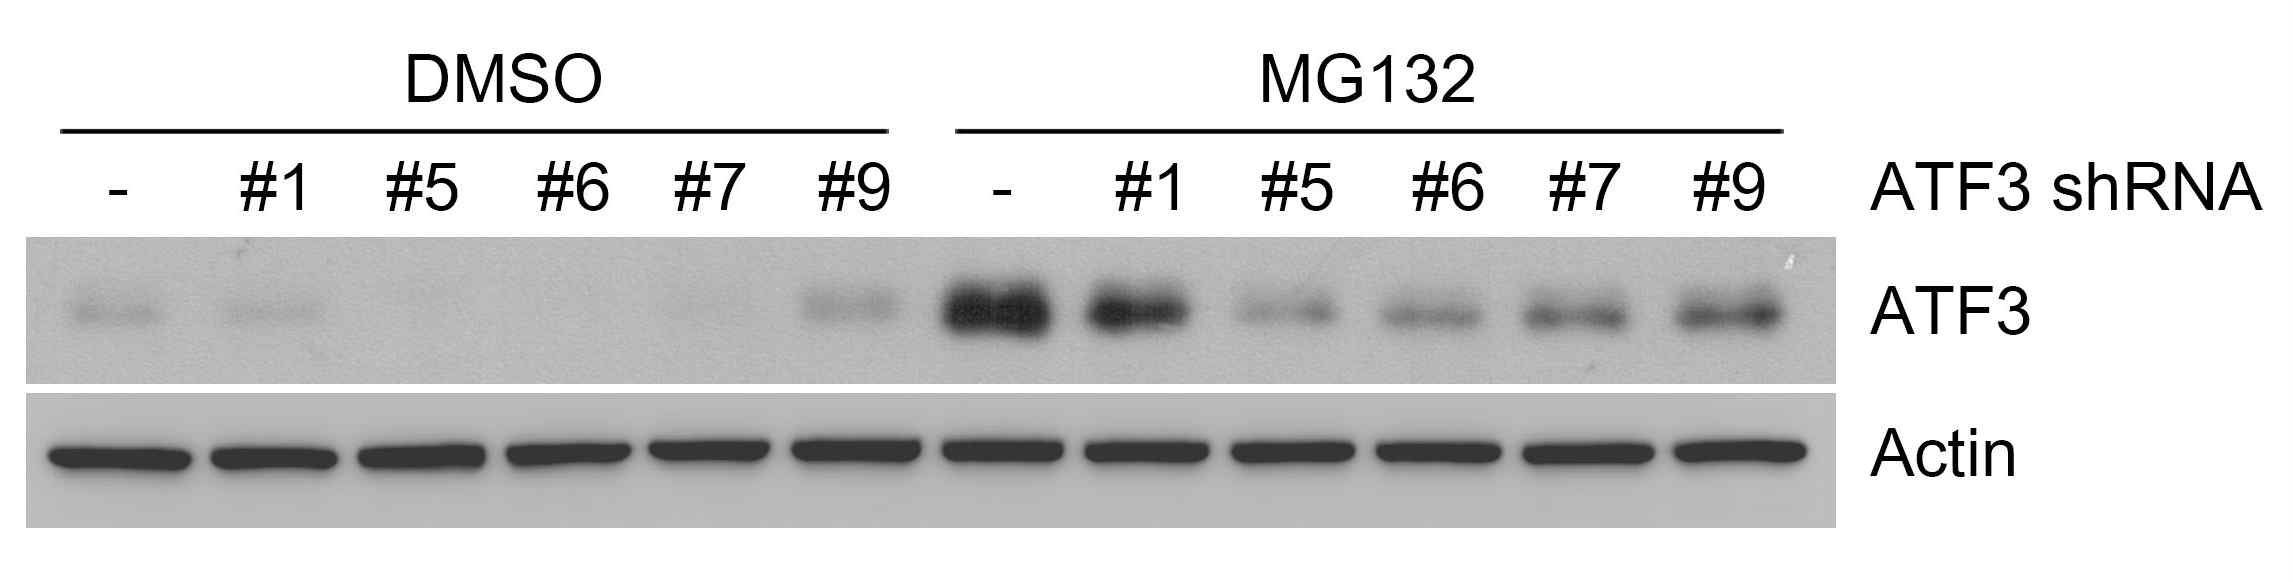 HEK293 세포에 여러 종류의 ATF3 shRNA를 처리한 후 ATF3의 발현 양상을 측정함으로써, #1이 미 미한 효과를 보이고, #5와 #6 shRNA가 효과적으로 ATF3의 발현을 억제함을 밝힘.